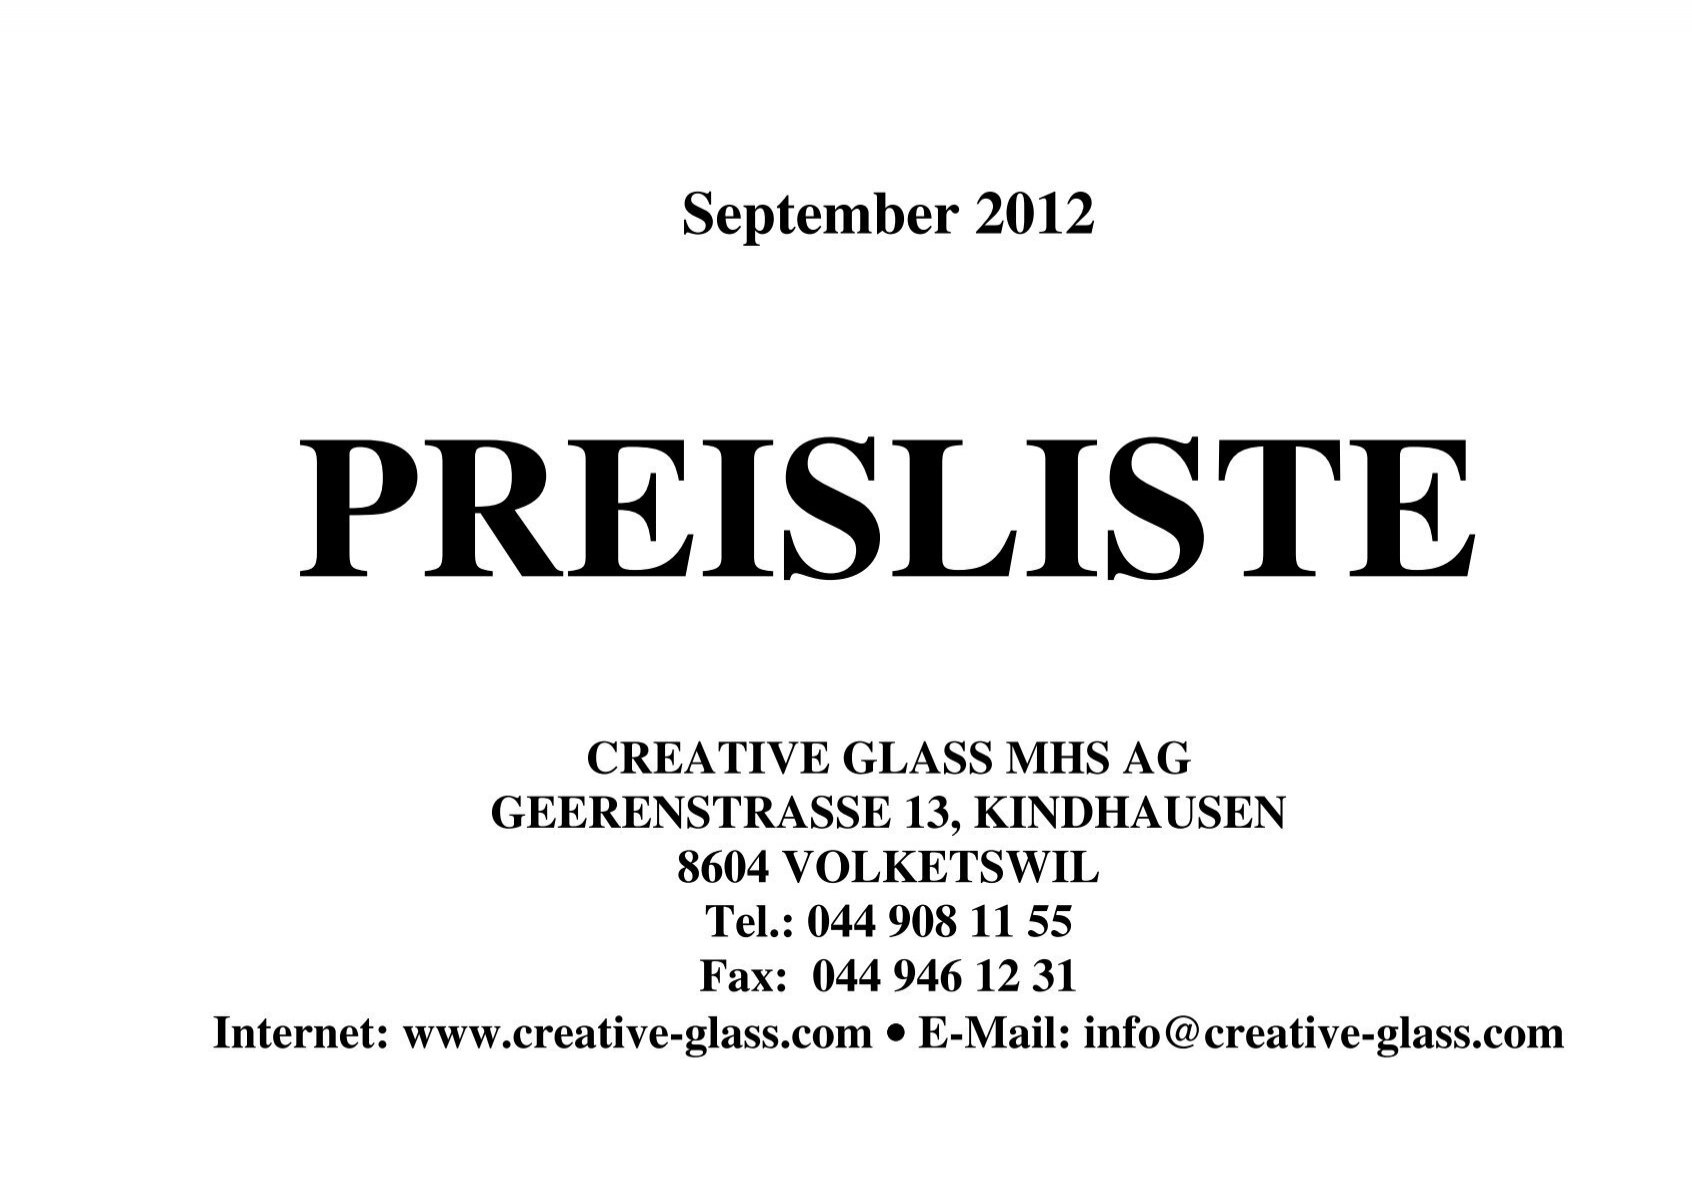 September Glass - Creative 2012